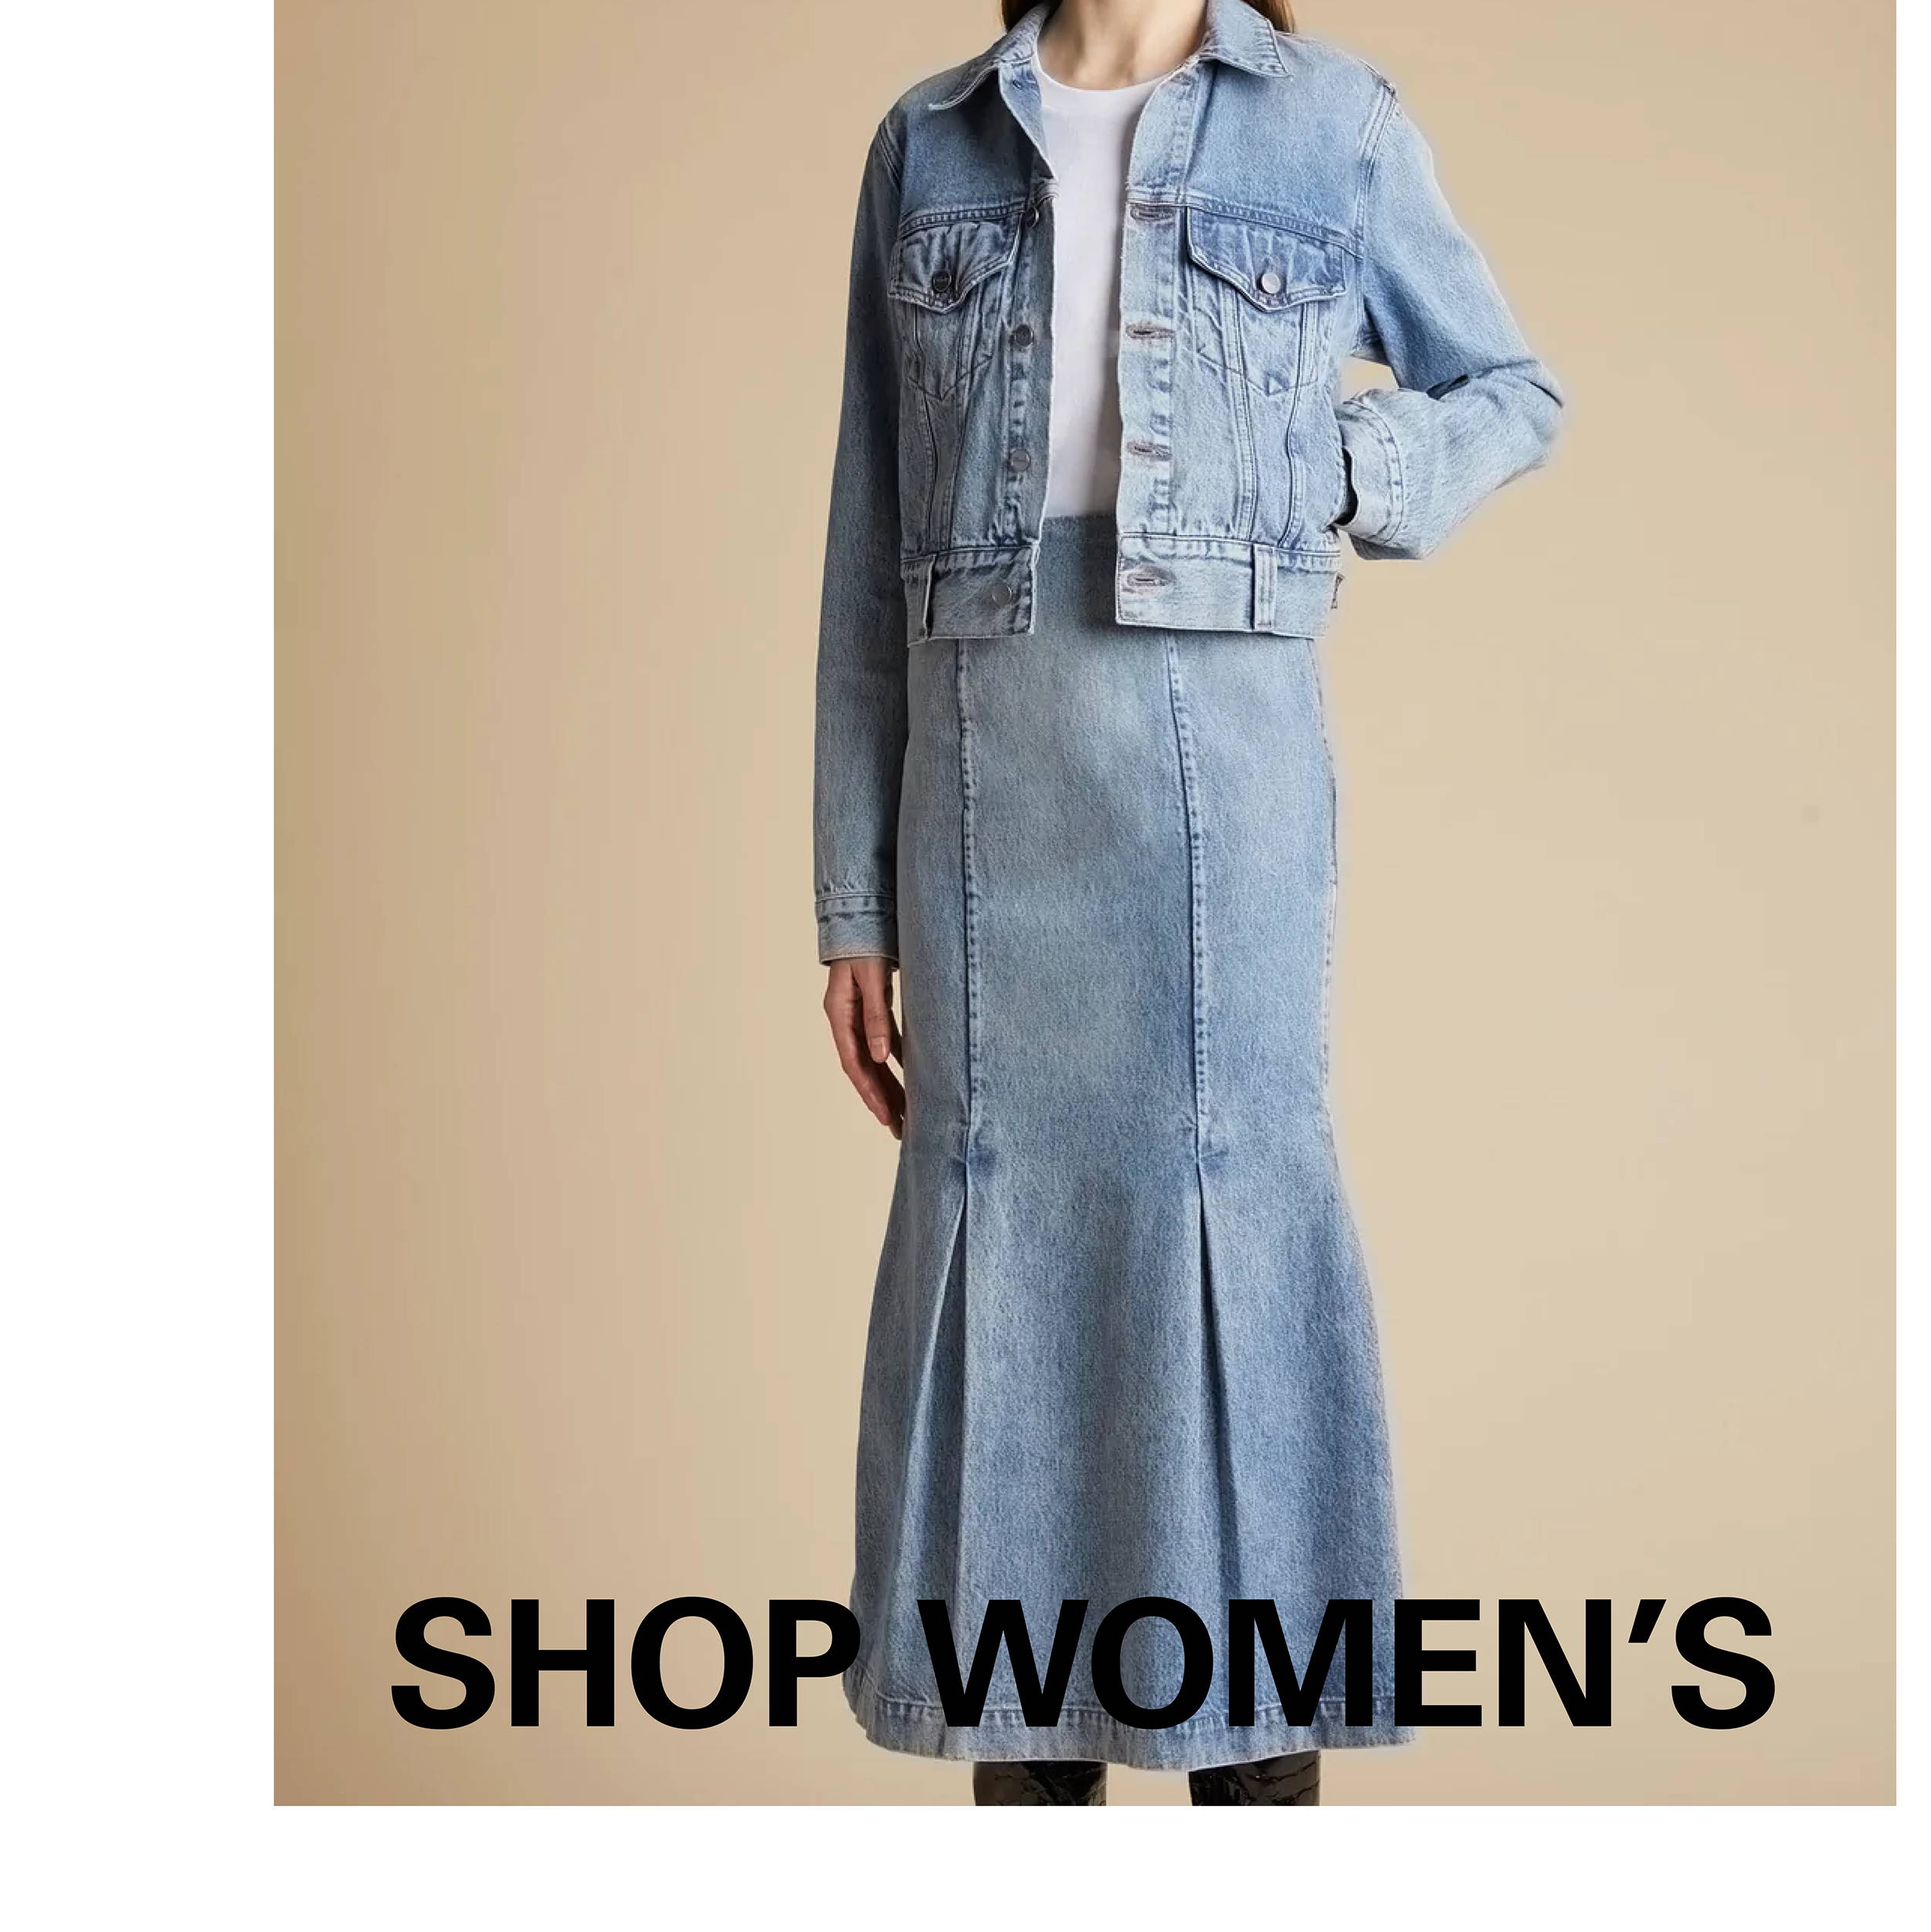 Shop Women's Denim Styles